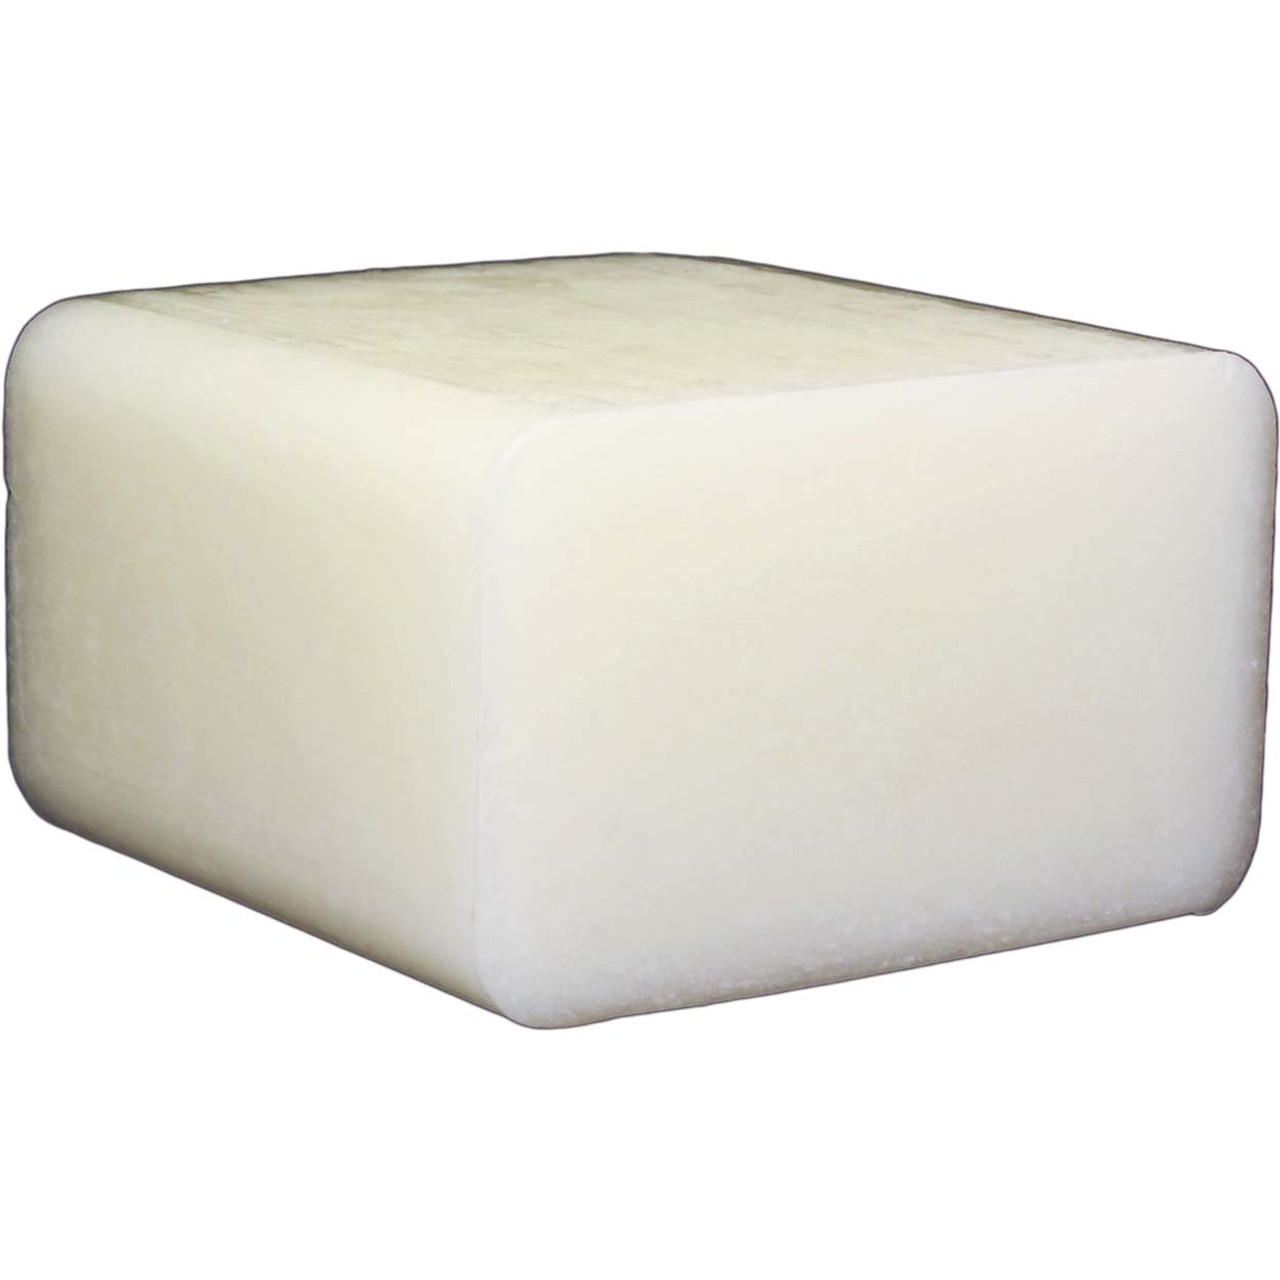 Premium Oatmeal MP Soap Base - 2 lb Tray - Wholesale Supplies Plus